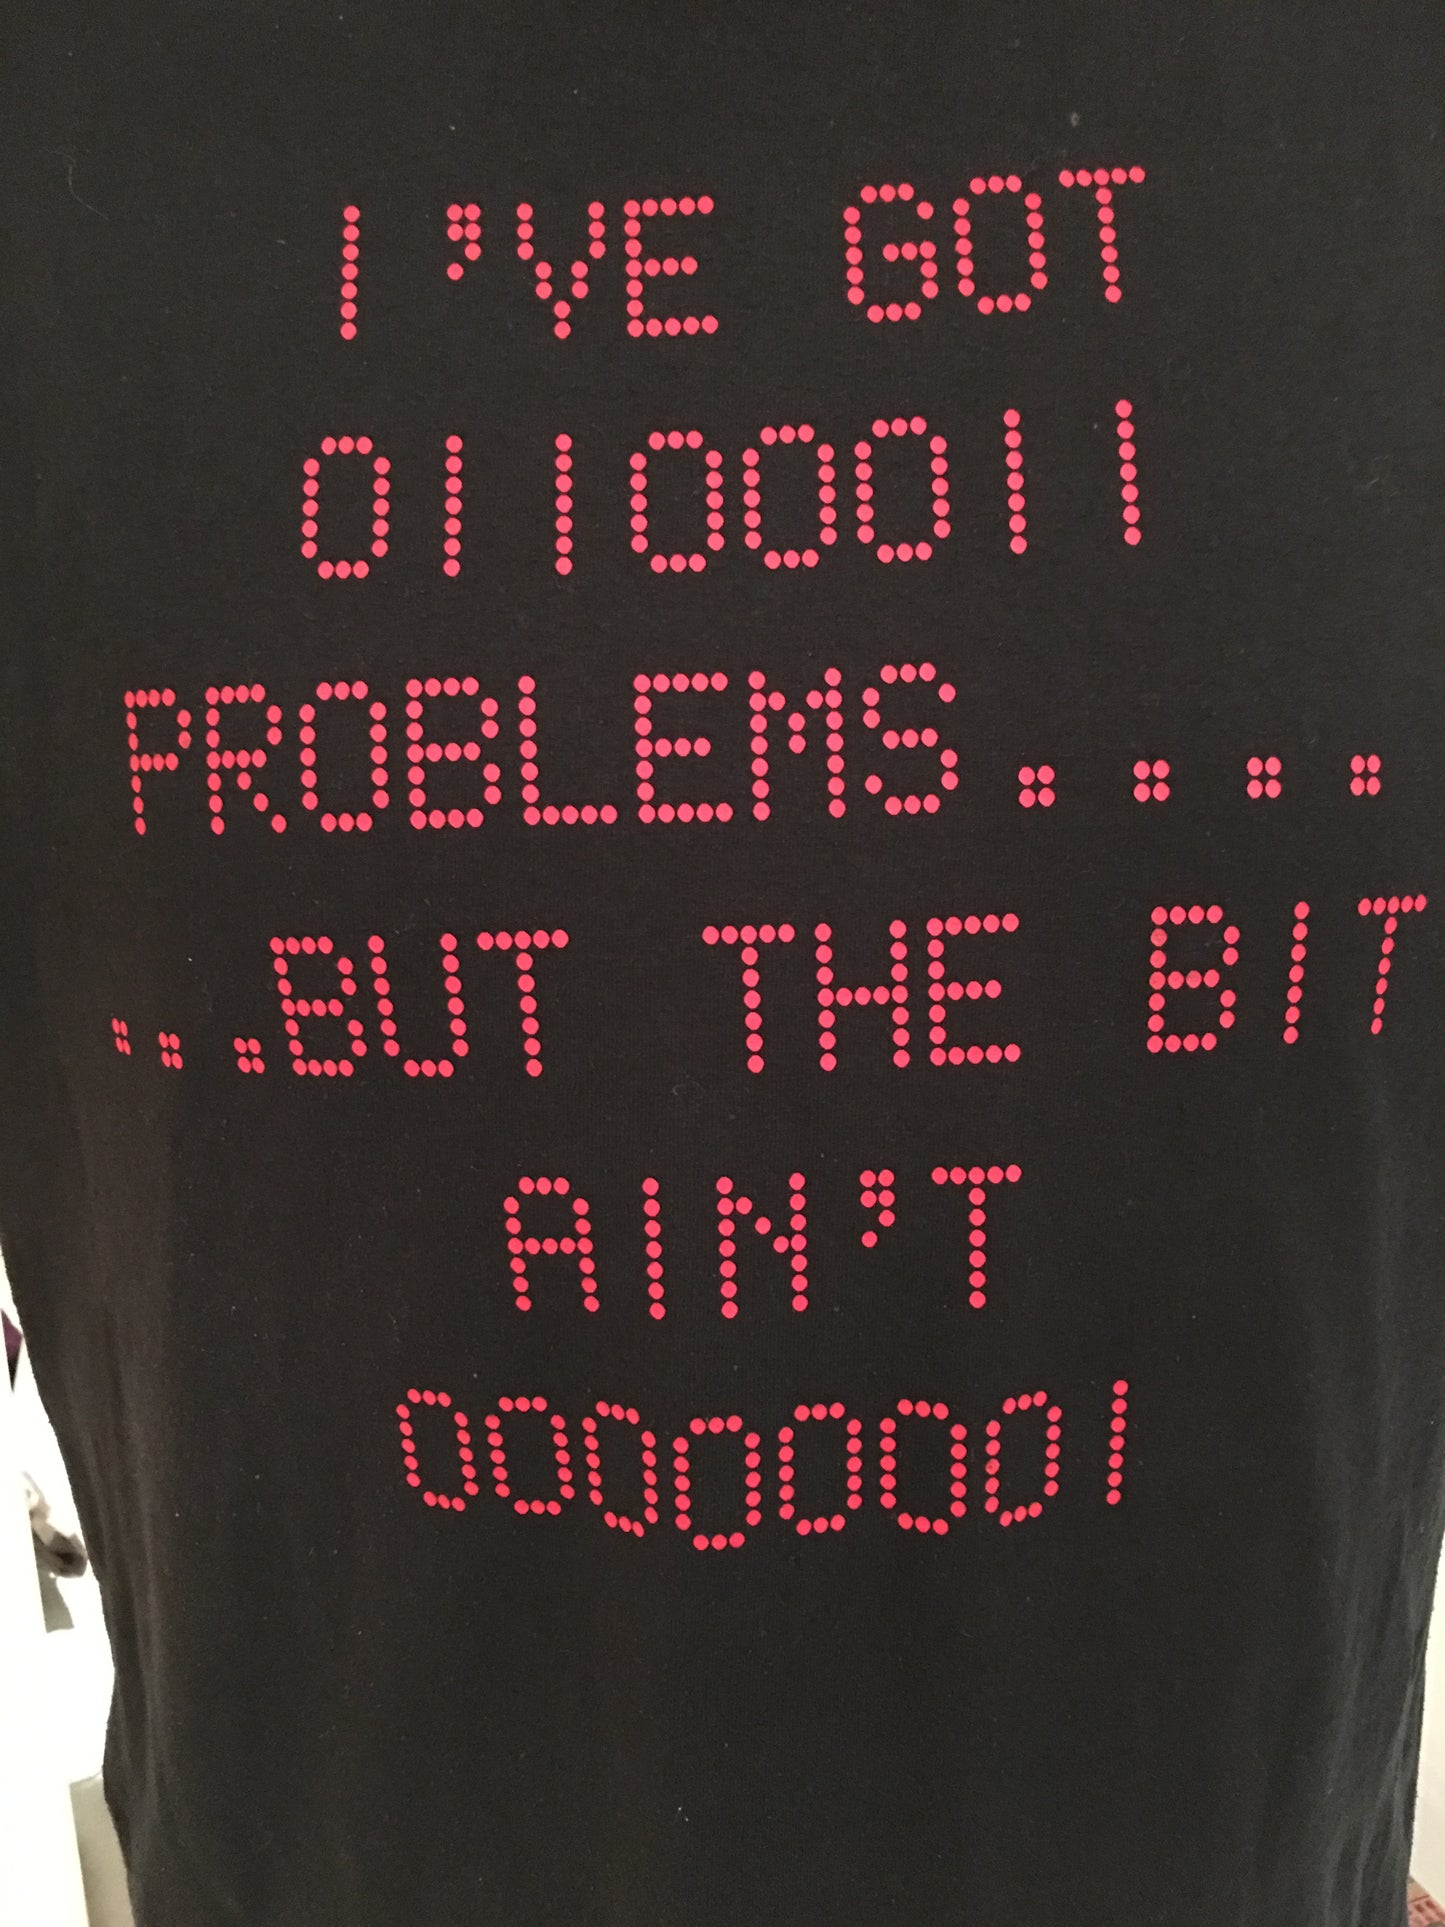 99 Problems T-shirt